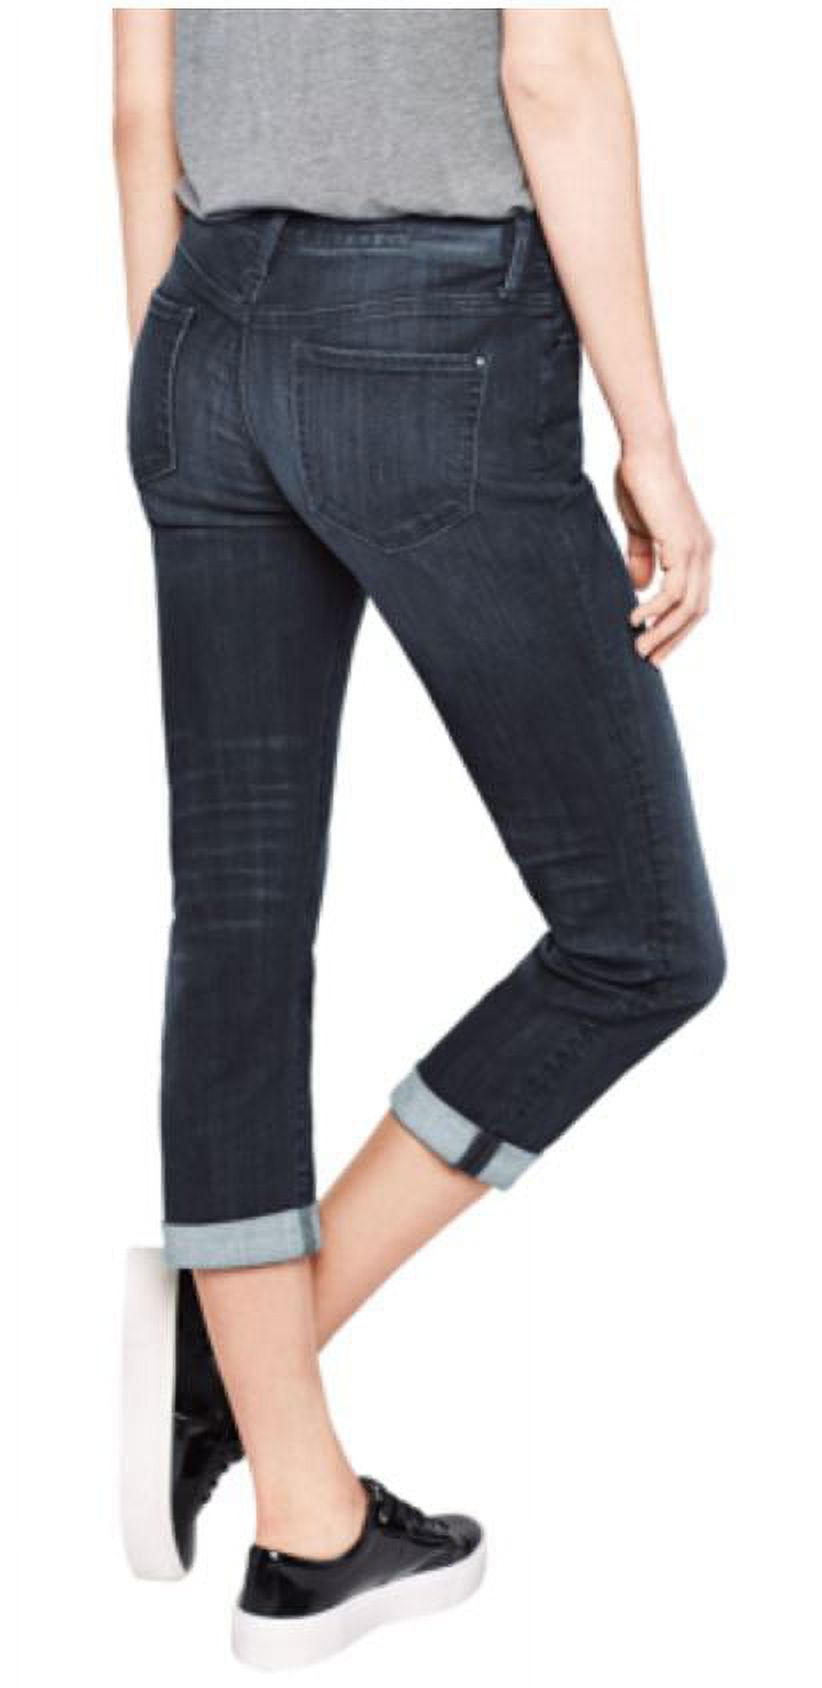 DKNY Womens Mid Rise Soho Skinny Crop Jeans (Dark Wash, 2) - image 2 of 3